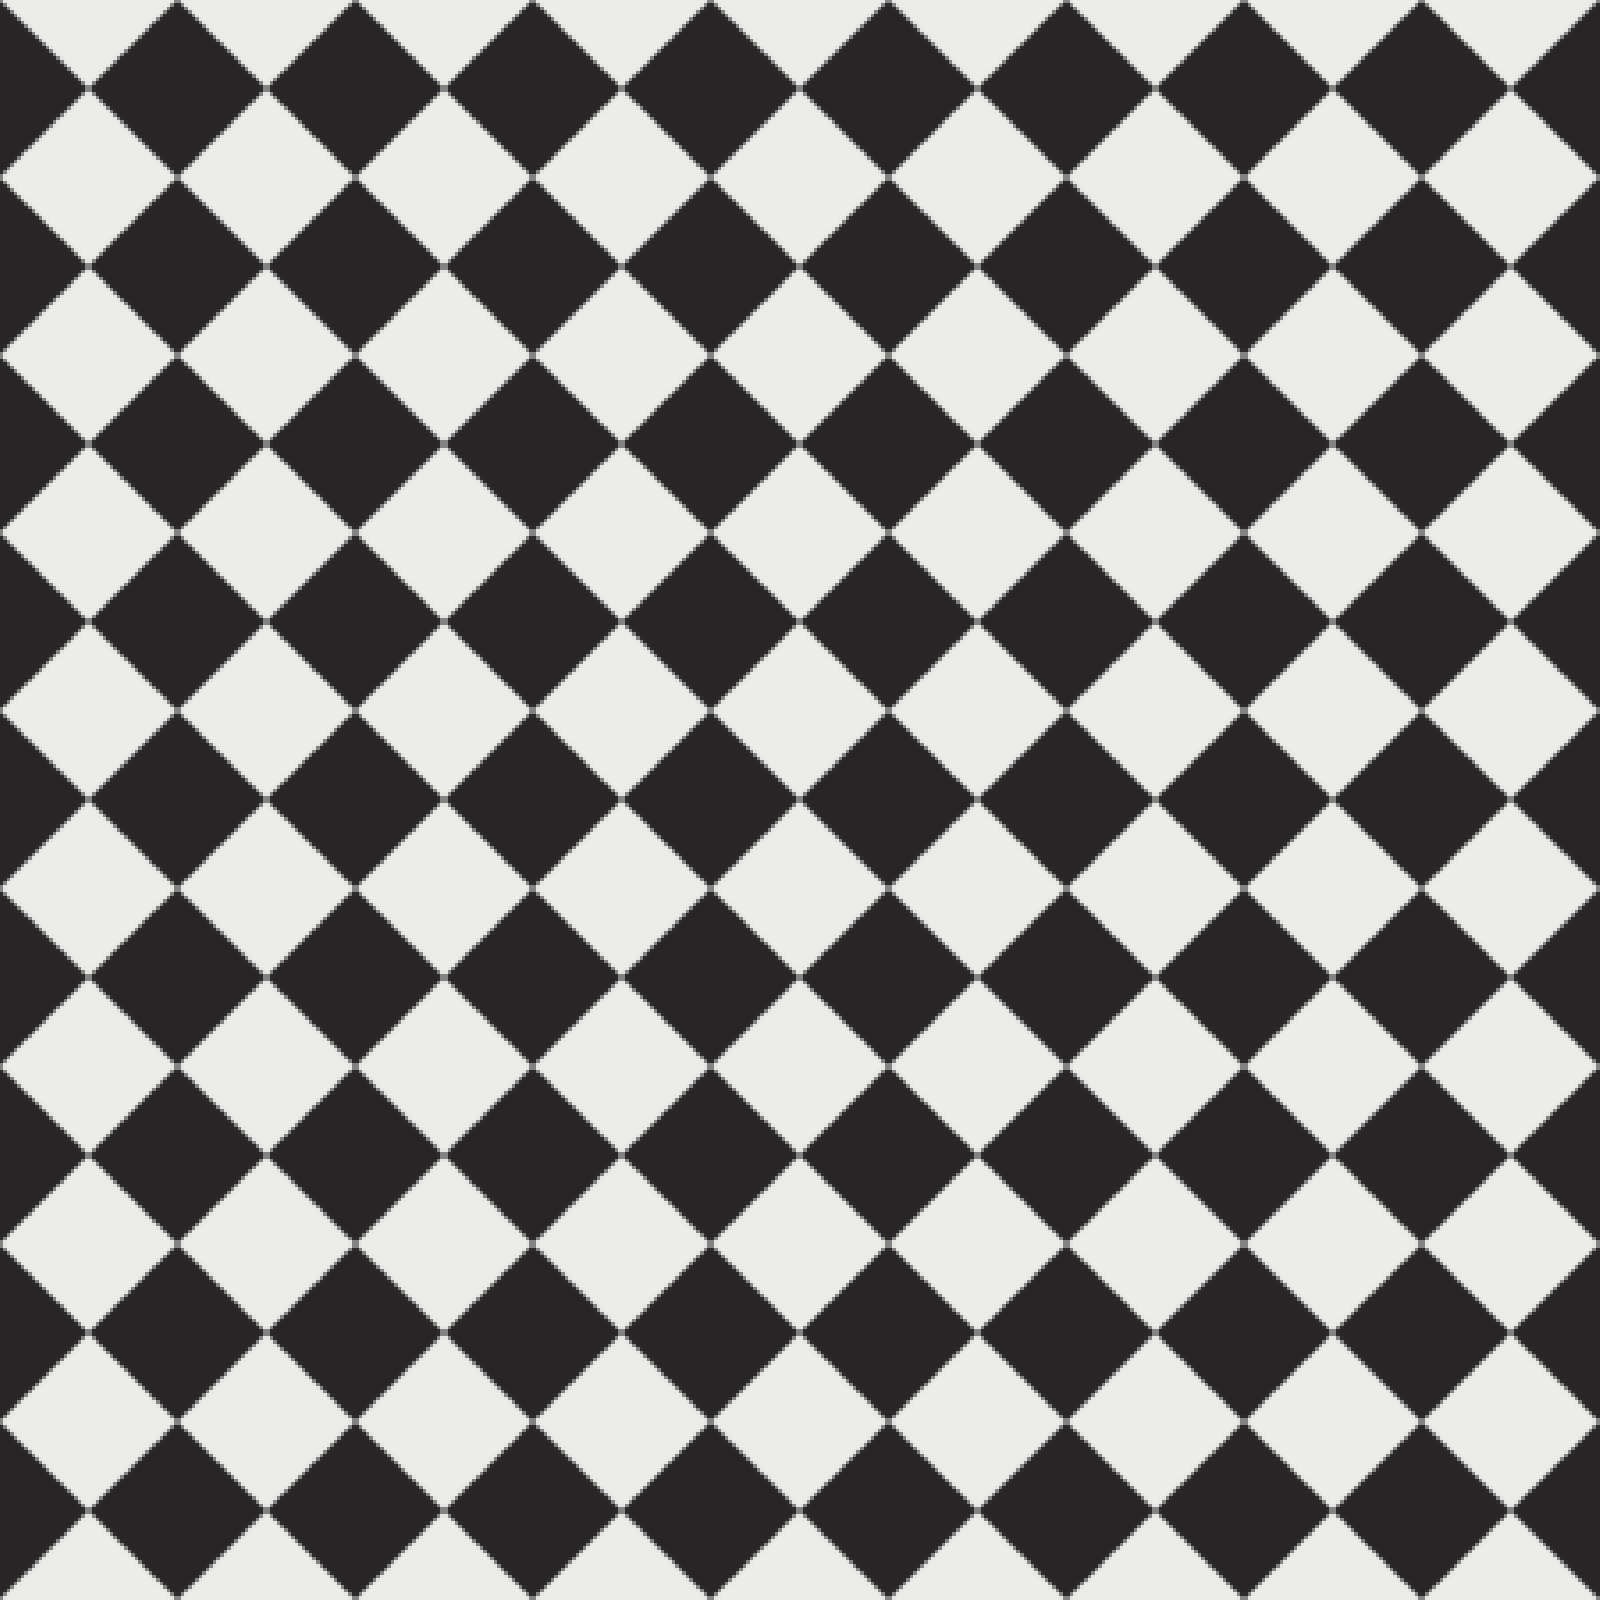 Geometric Floor Tiles - 5x5cm Squares (to match border designs)